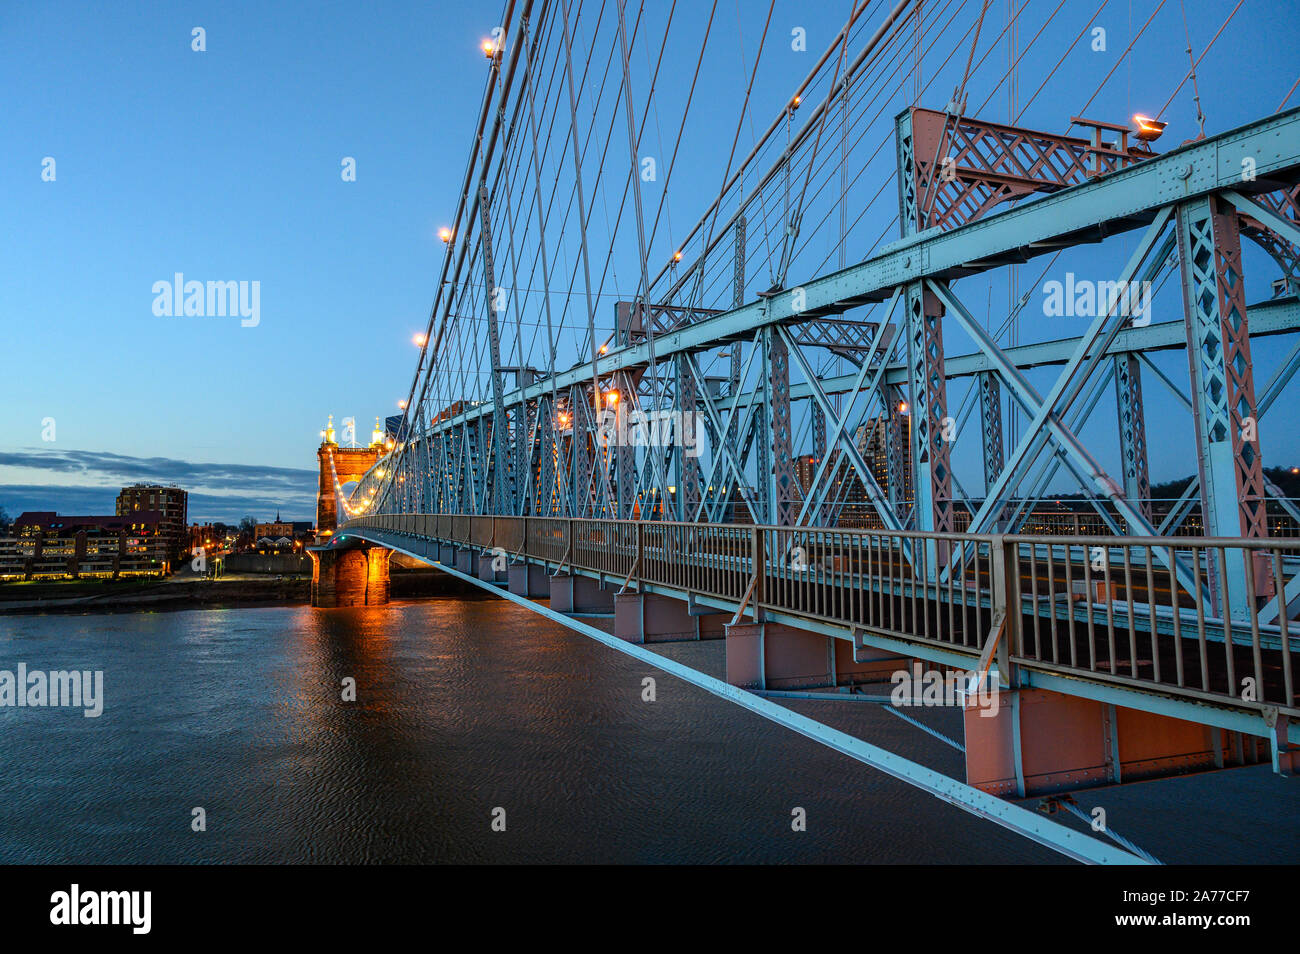 The John A. Roebling Suspension Bridge in Cincinnati, Ohio crosses the Ohio River between Cincinnati and Covington, Kentucky. Stock Photo